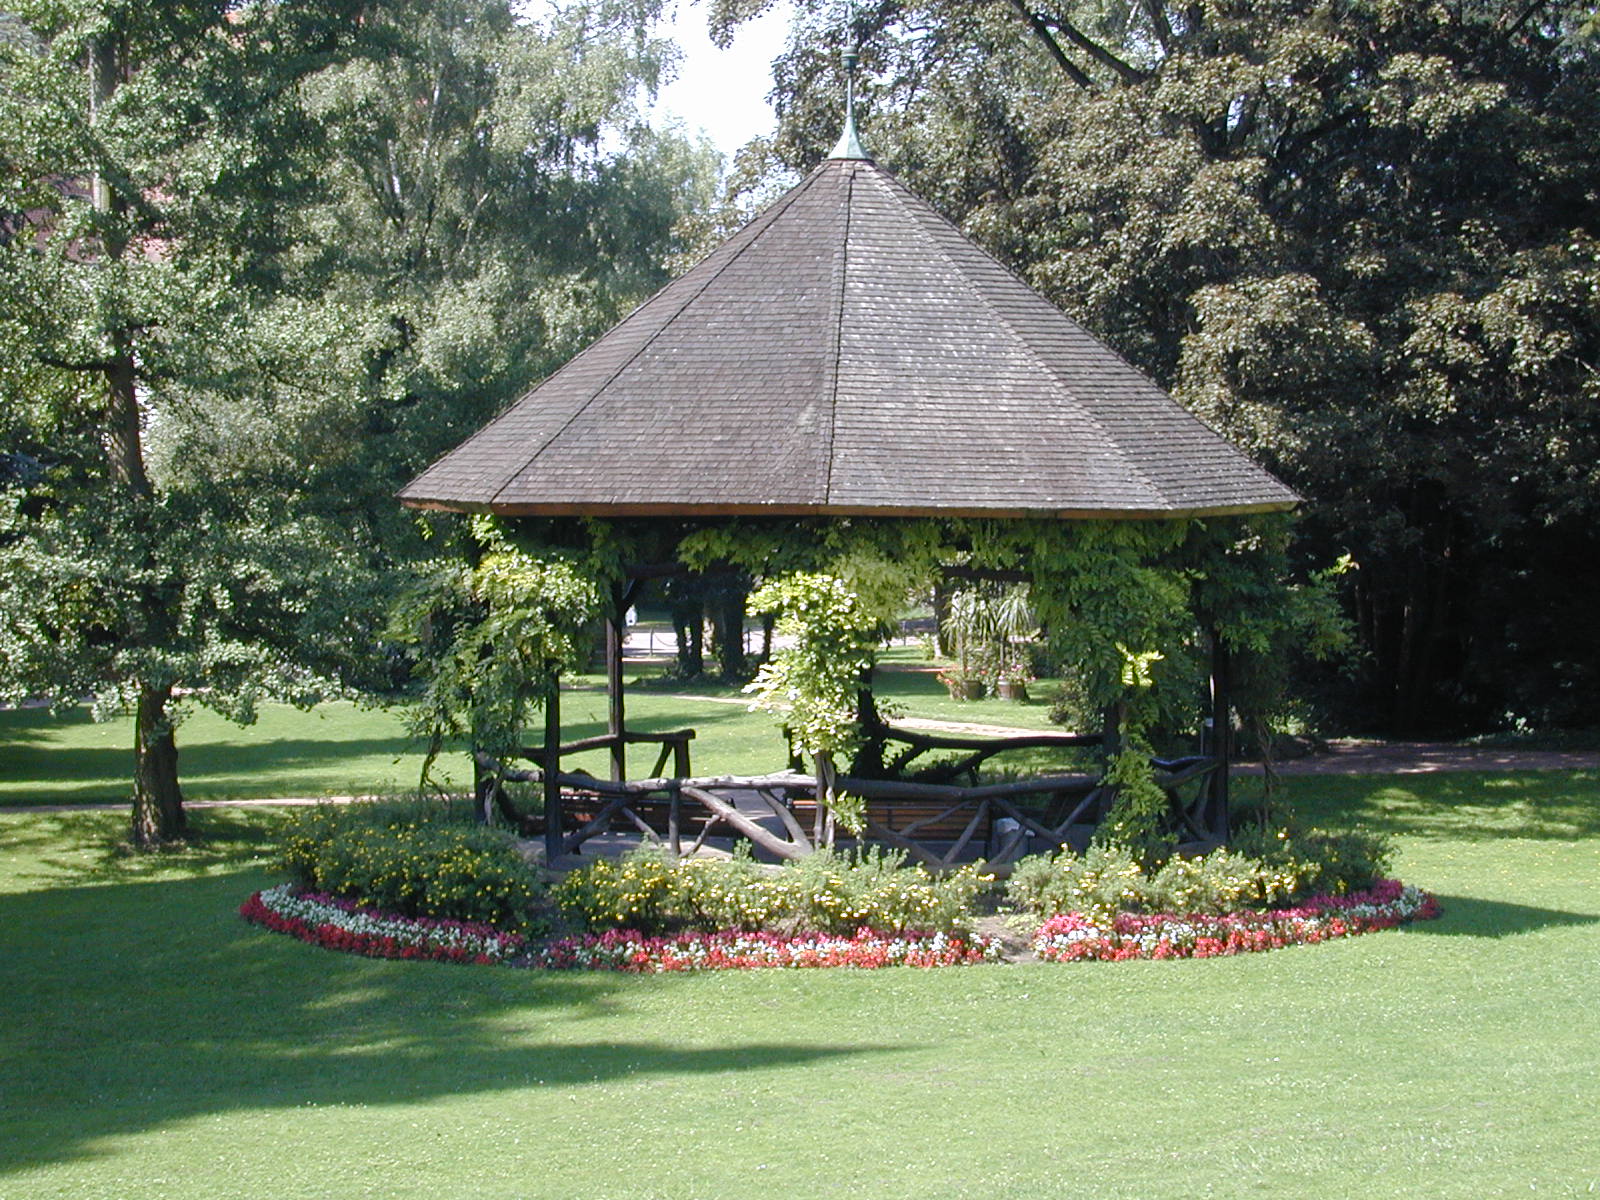                                                     Pavillon im Stadtgarten                                    